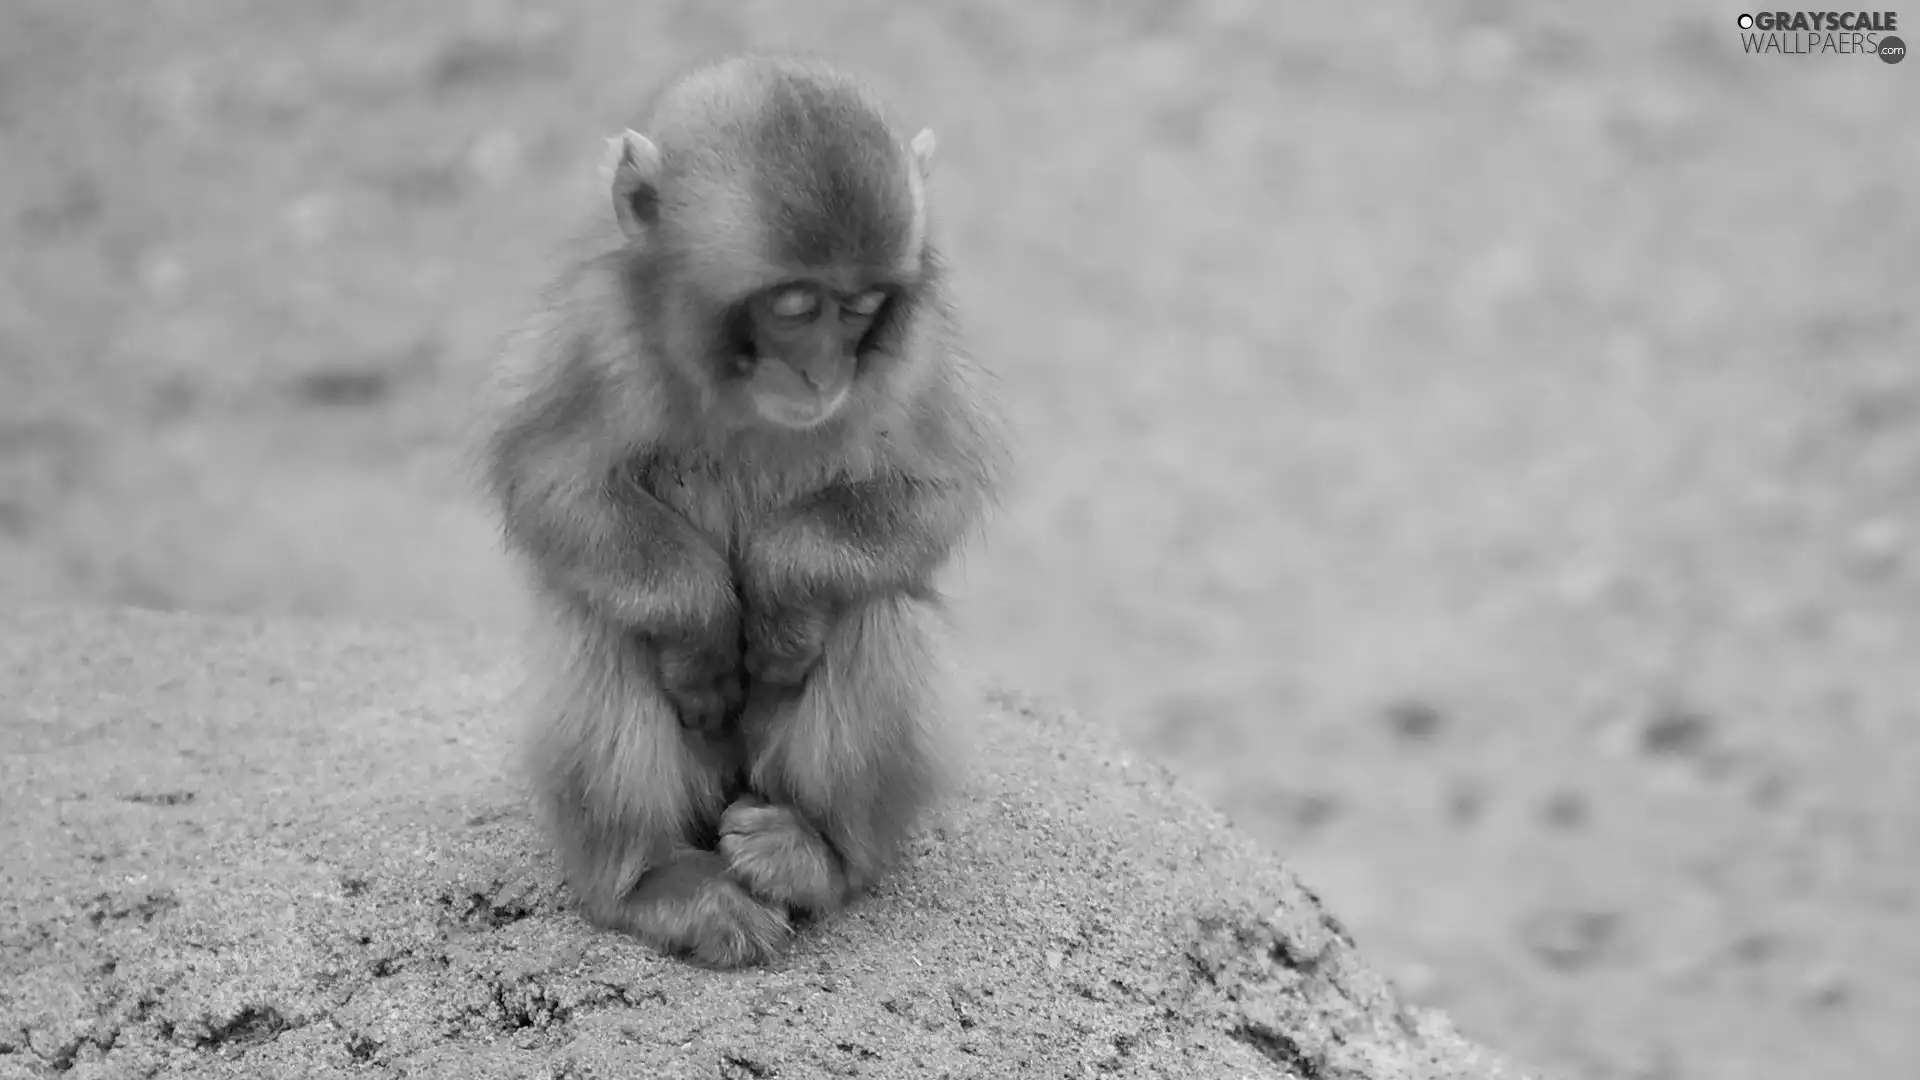 Monkey, sad, small